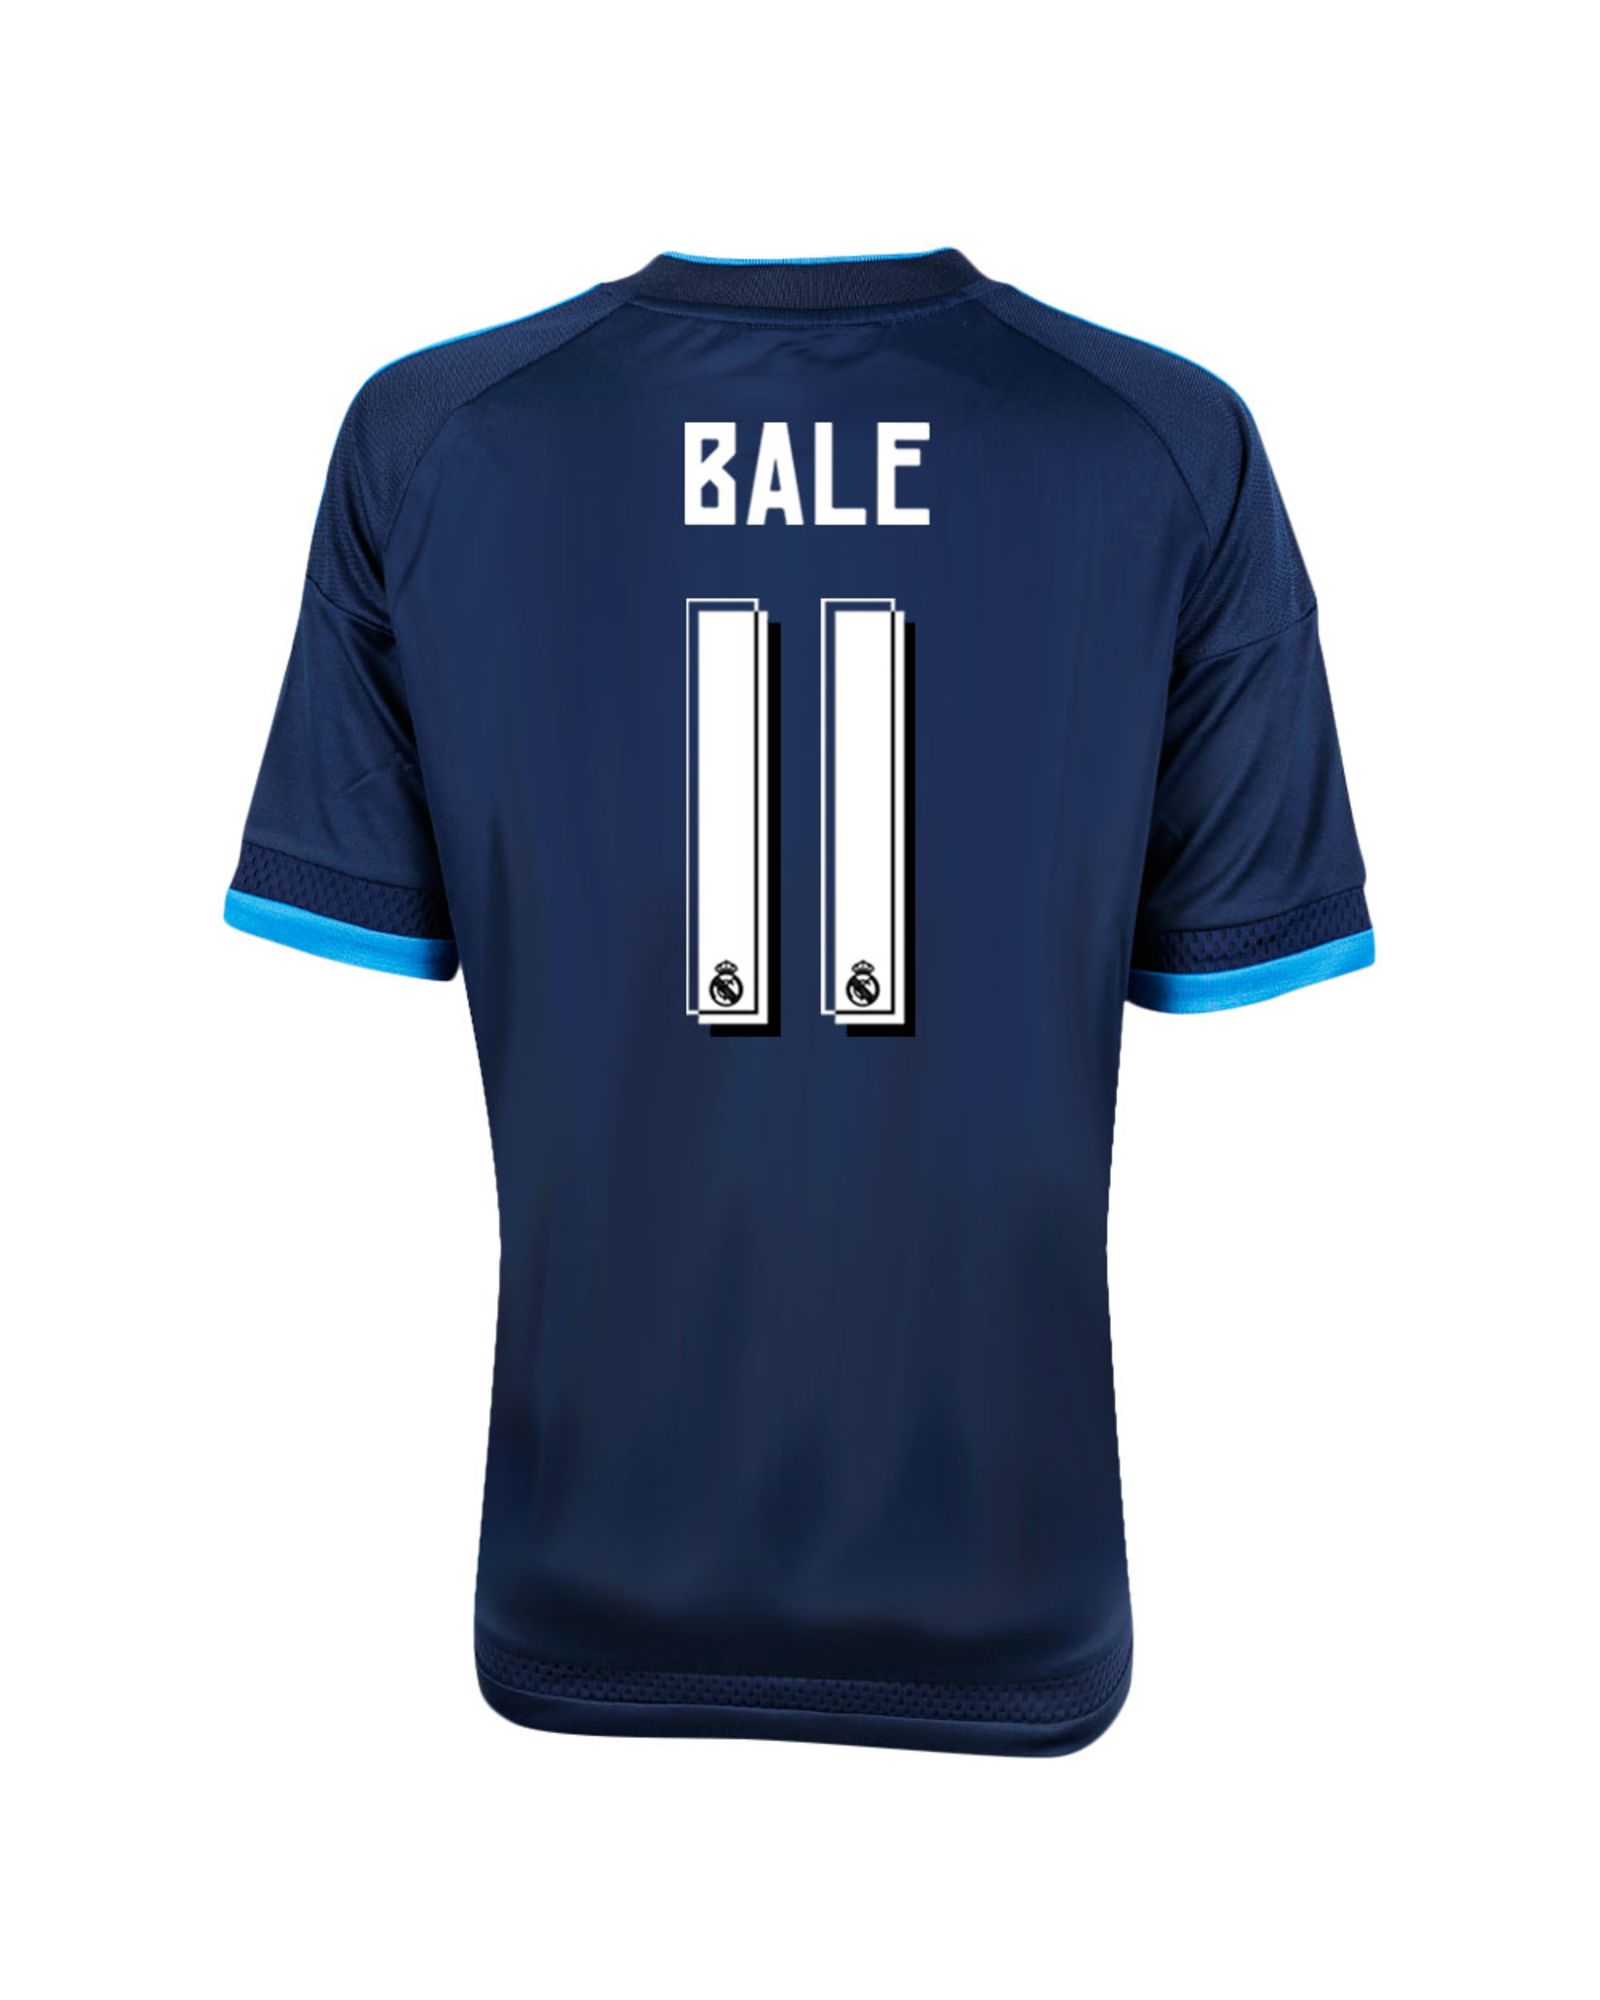 Camiseta 3ª Real Madrid 2015/2016 Bale UCL Junior Azul - Fútbol Factory